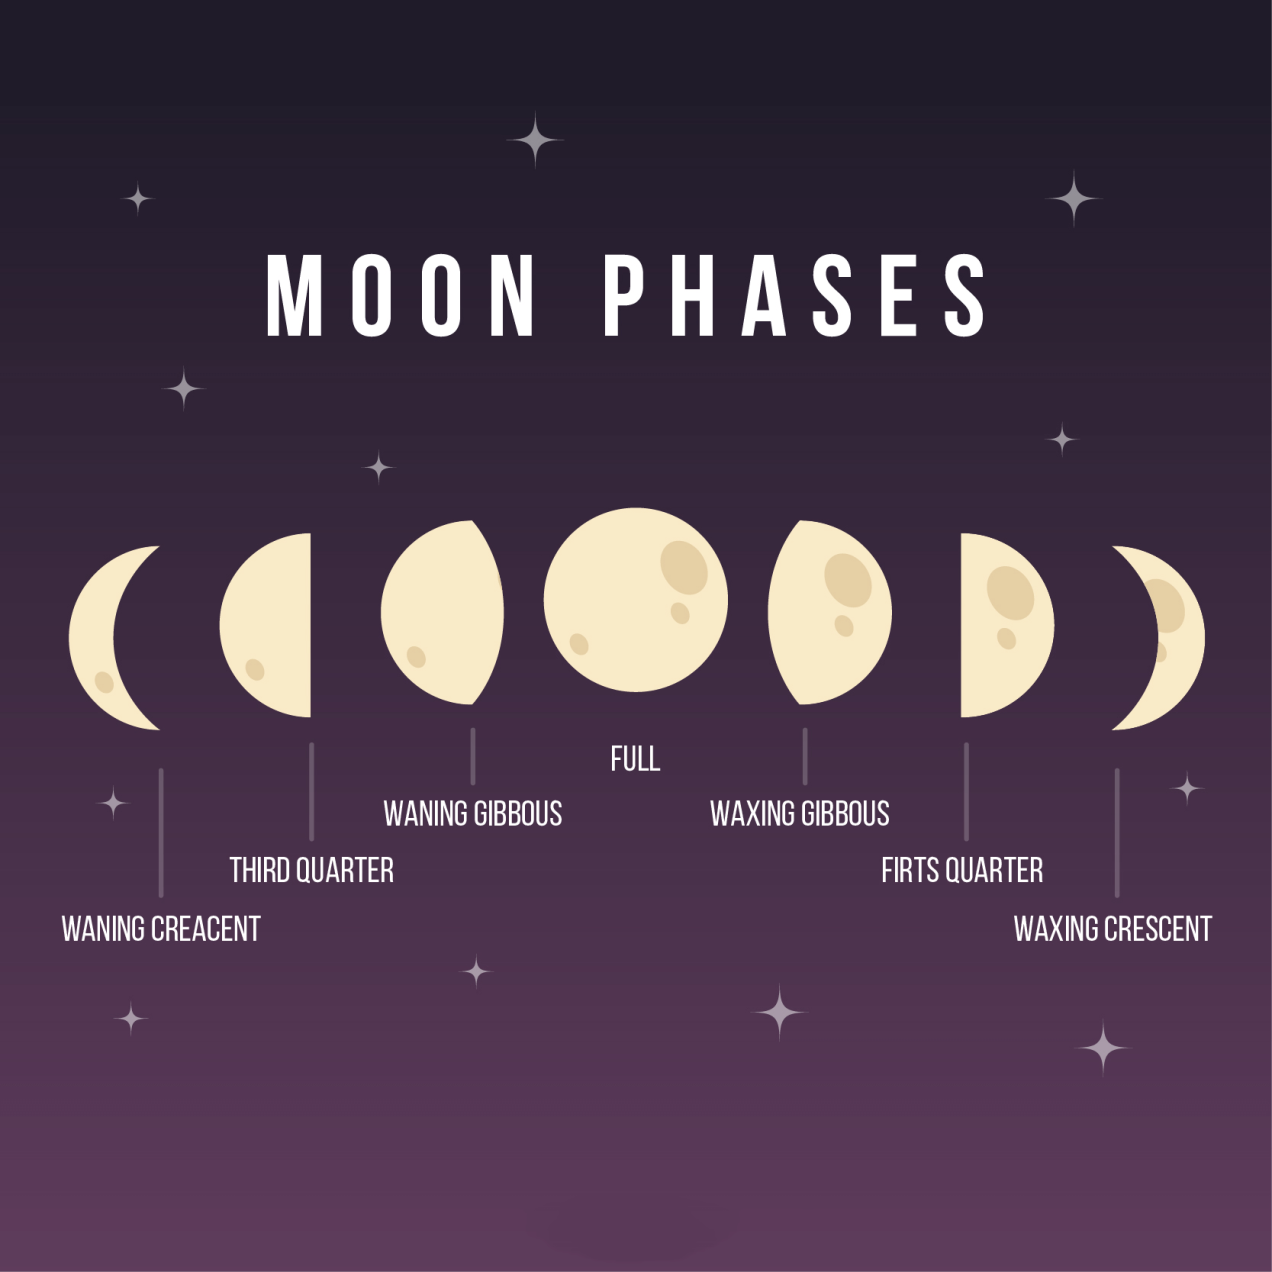 Moon states. Фазы Луны phases of the Moon. Фаза Луны Waxing Crescent Moon. Фазы Луны рисунок. Растущая Луна астрономия.